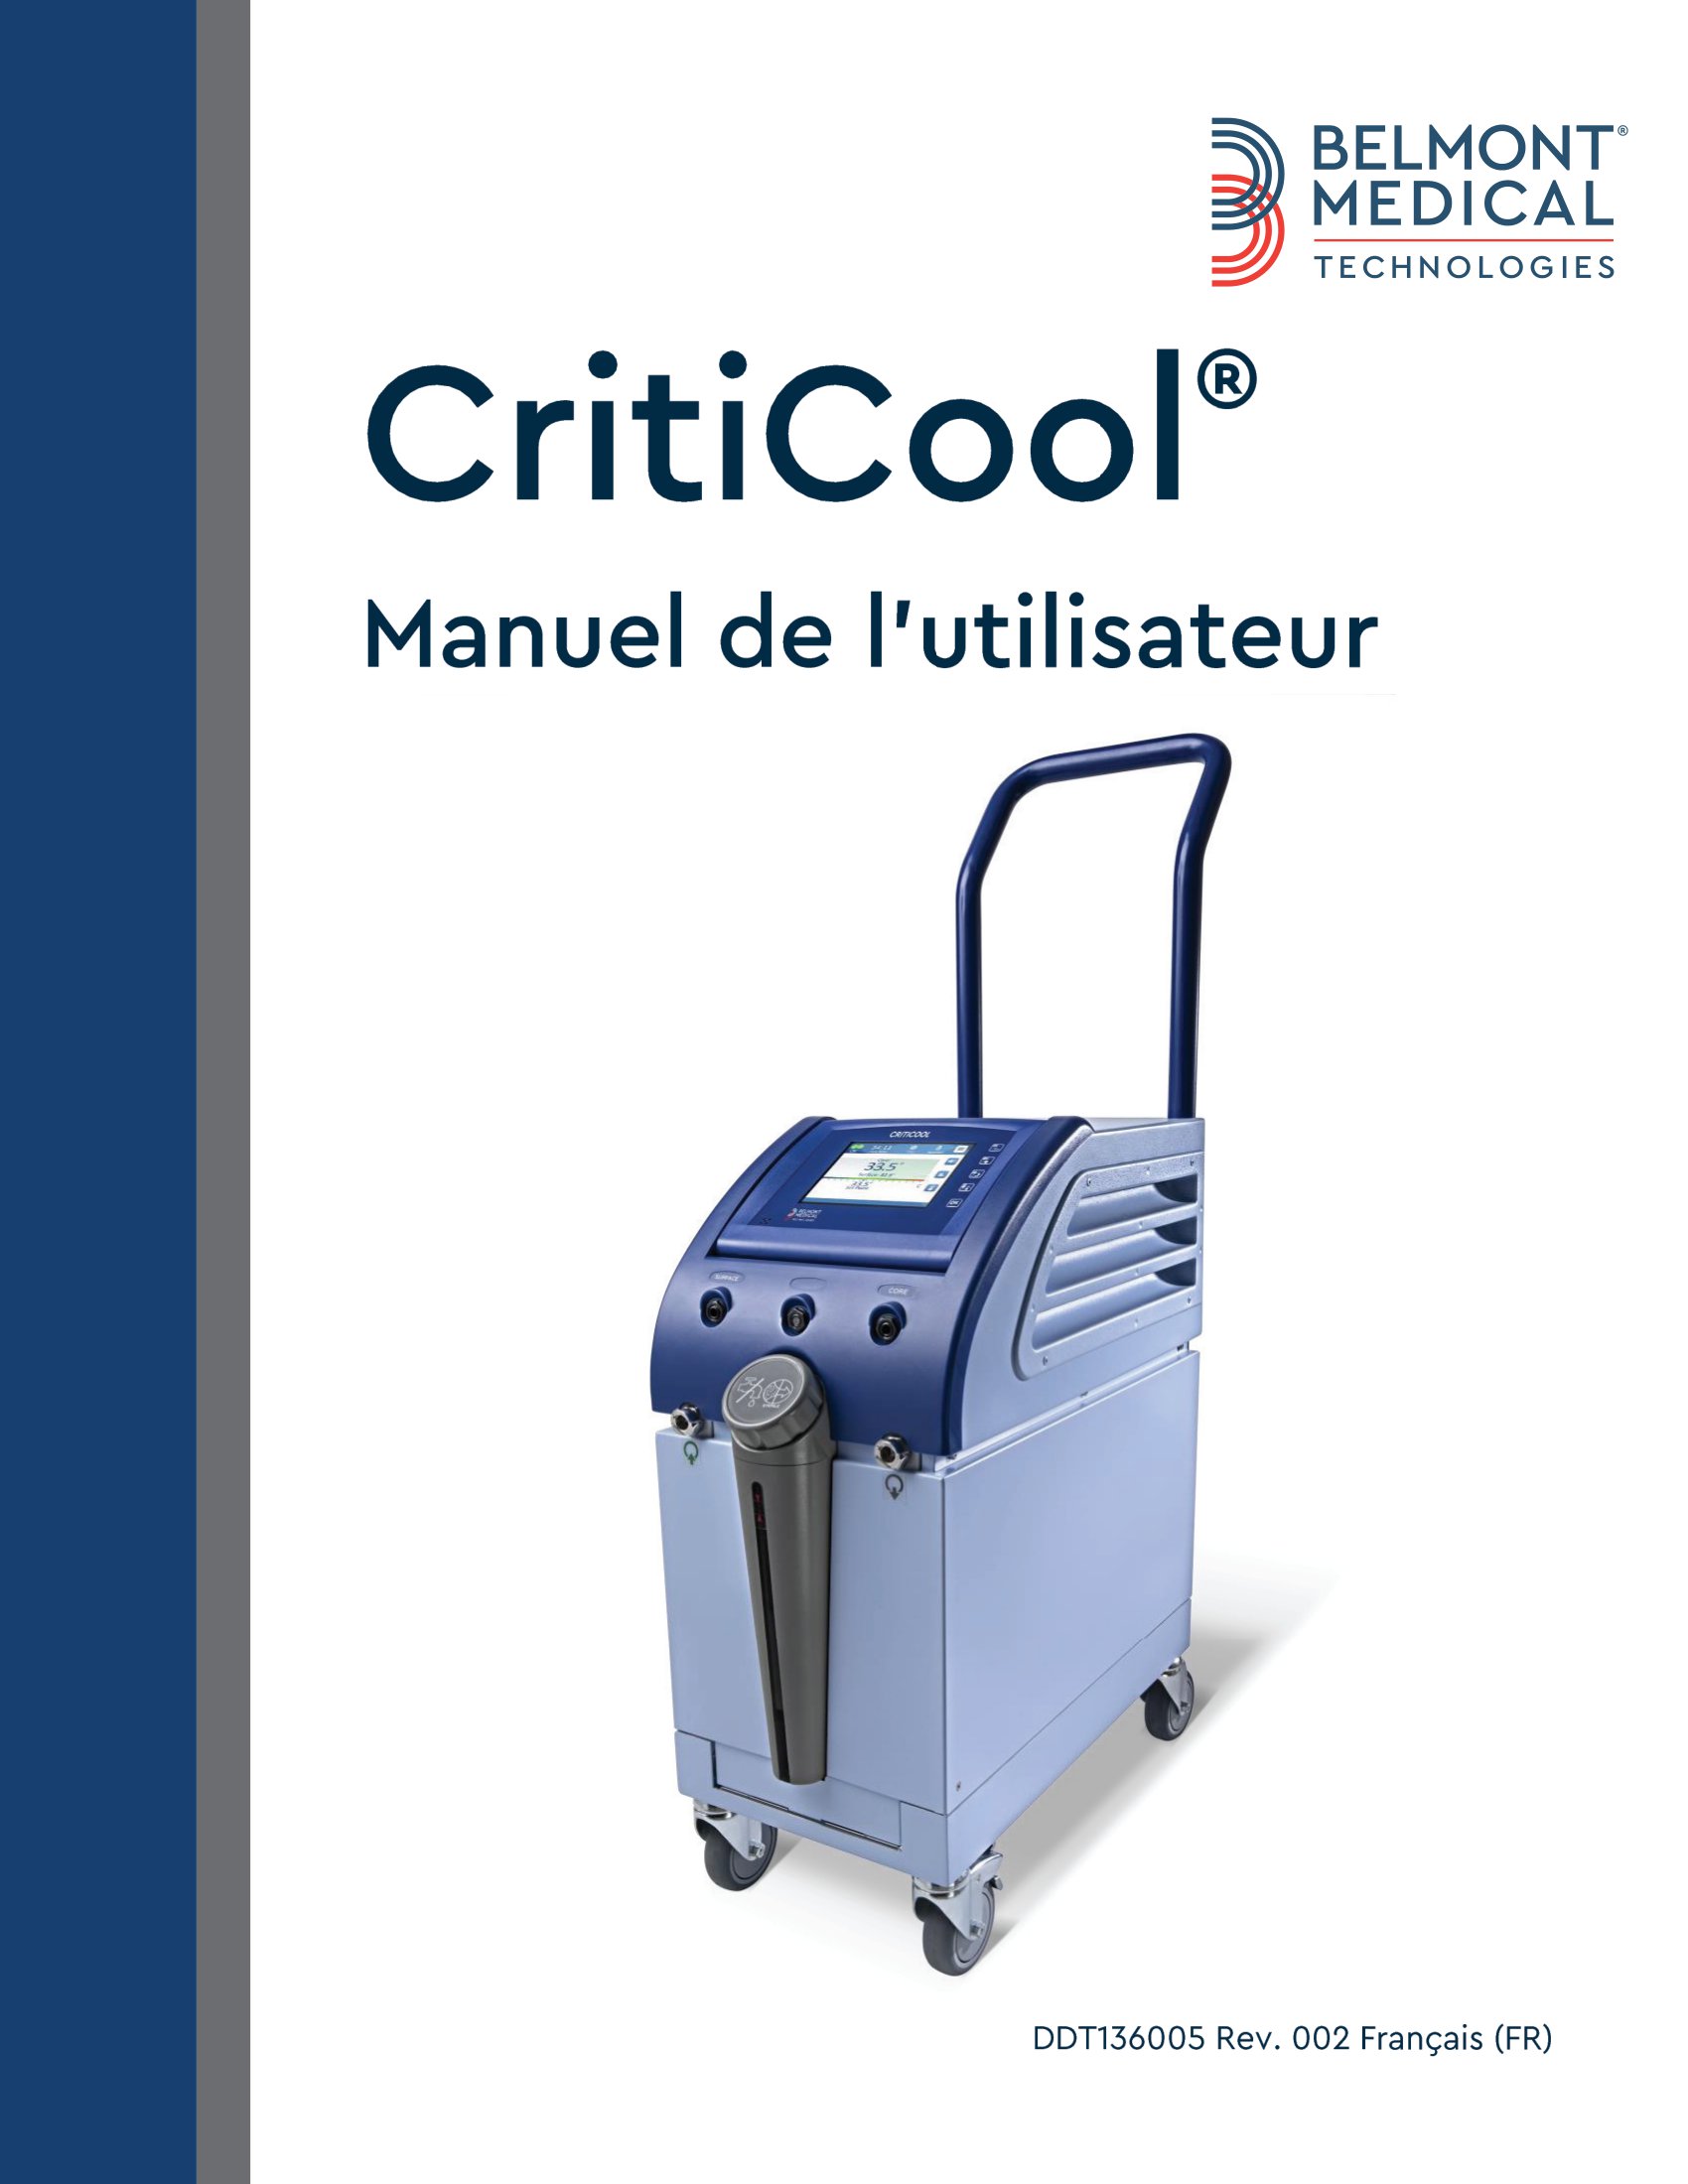 CritiCool 6.3 User Manual (French)